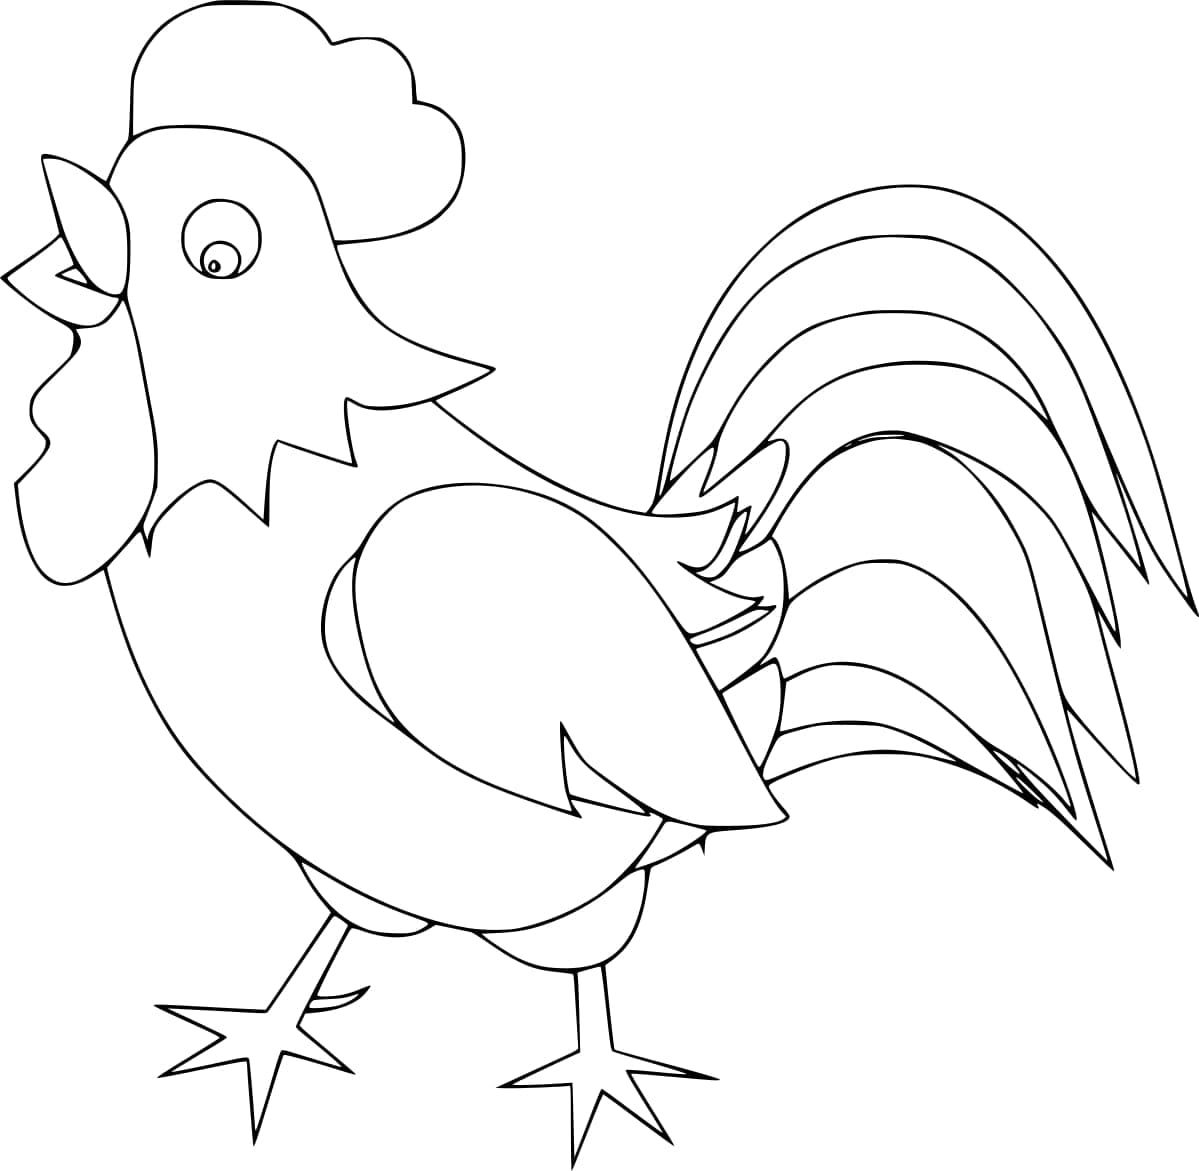 Coq Facile coloring page